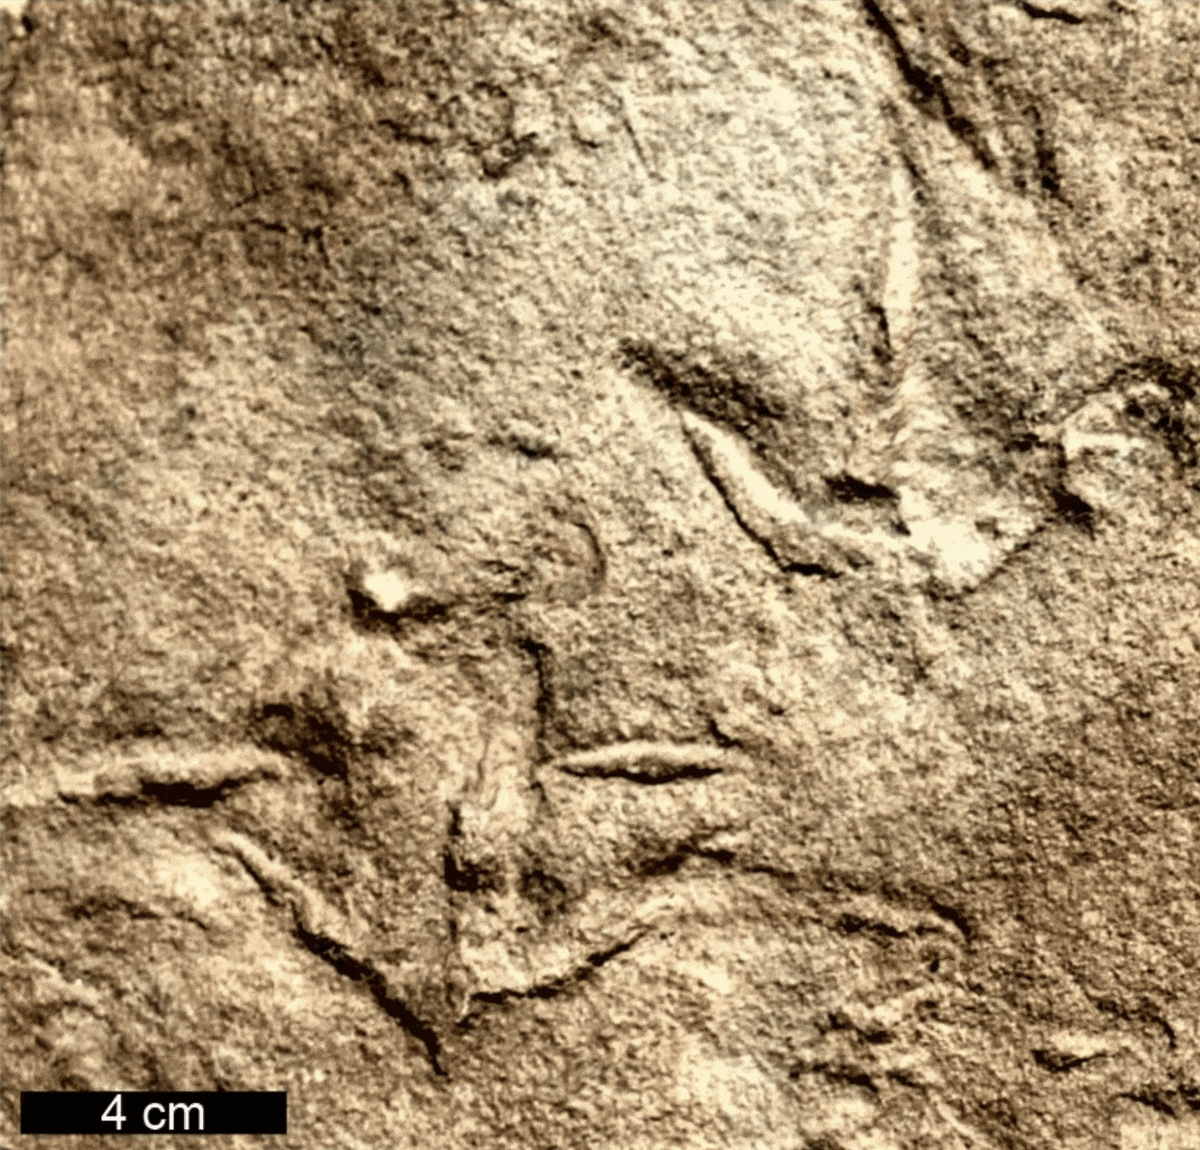 comparison of the prehistoric, bird-like tracks and modern bird tracks shows similarities in print shape